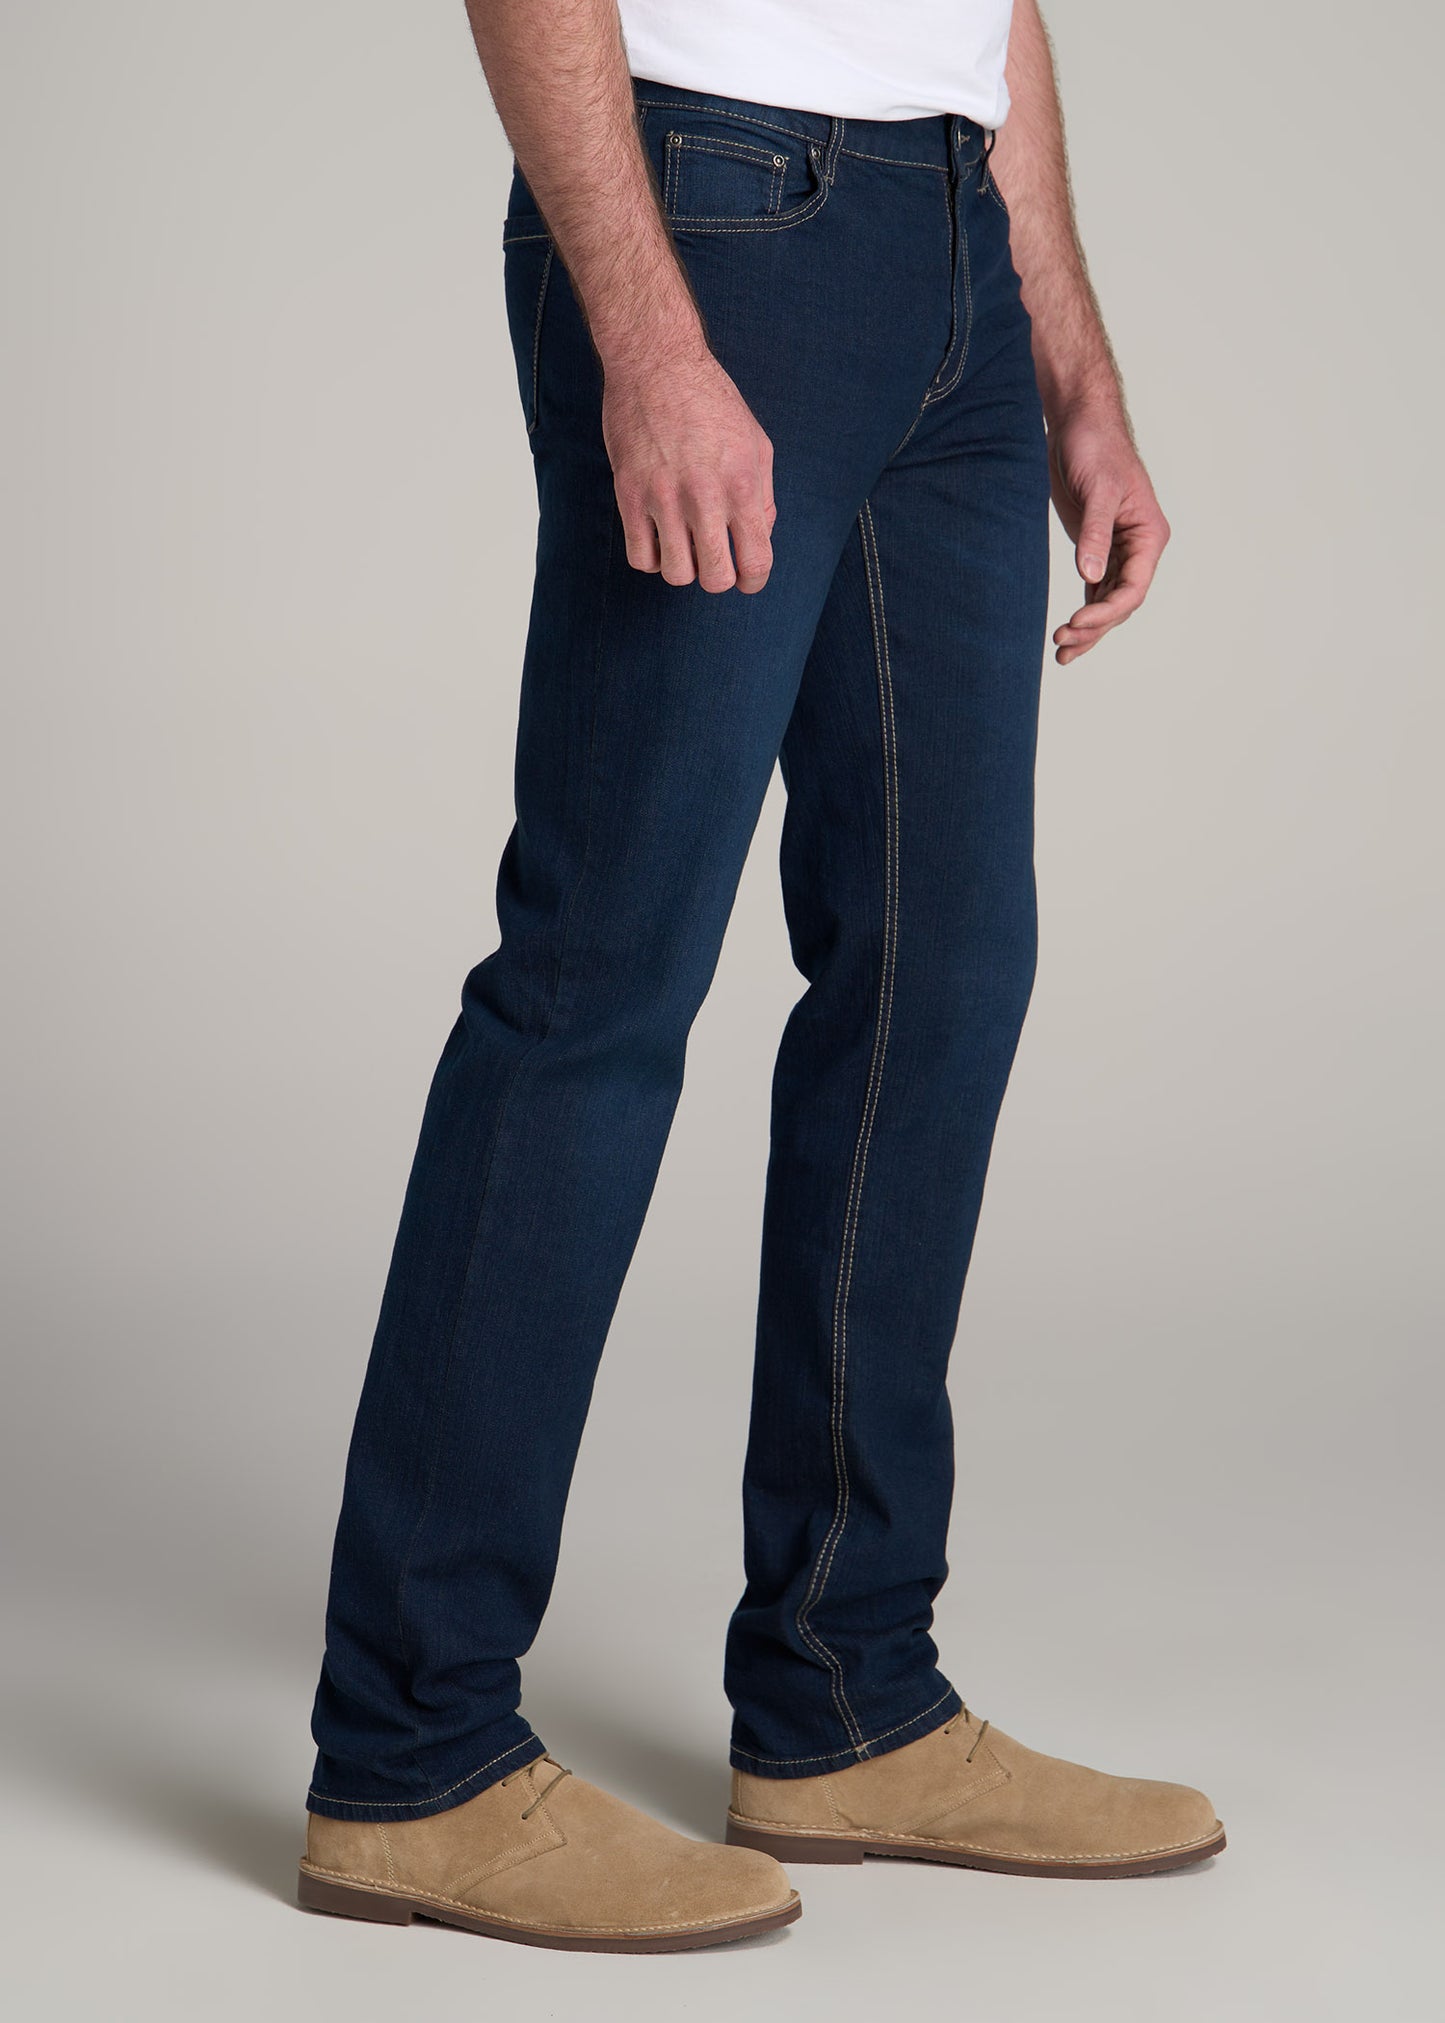 J1 STRAIGHT LEG Jeans for Tall Men in Blue Steel